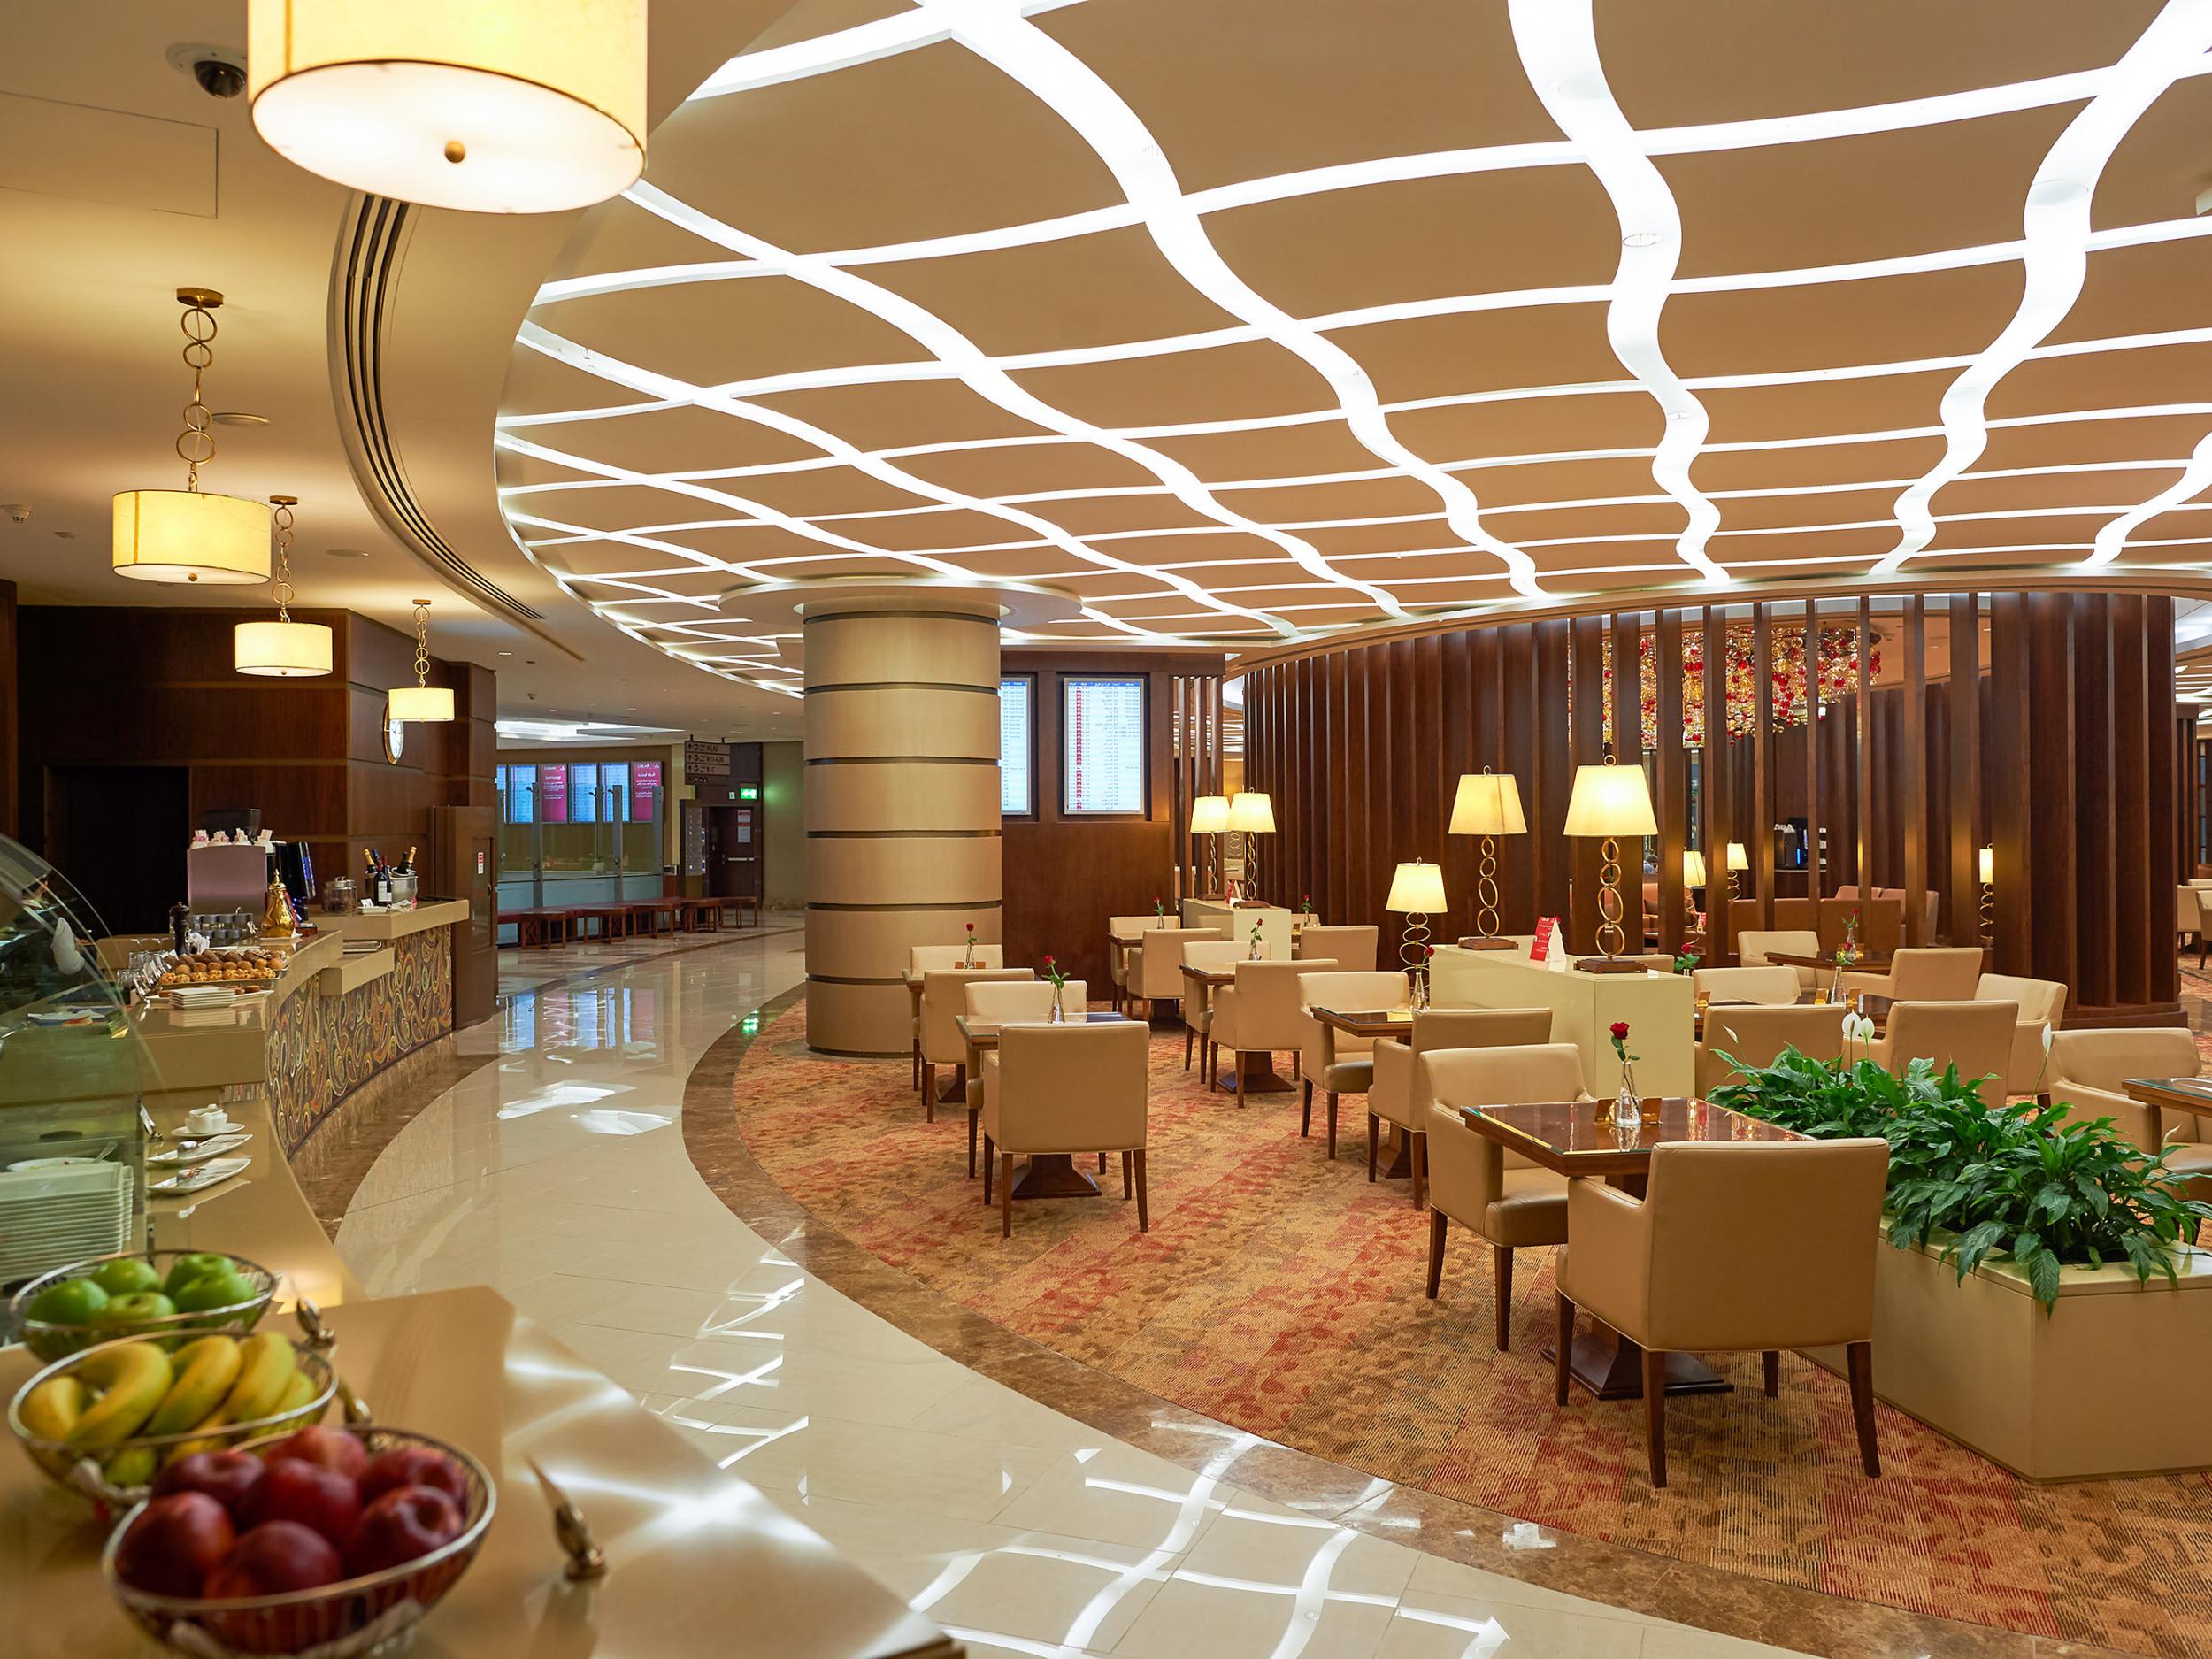 Interior of Emirates first class lounge at Dubai UAE airport